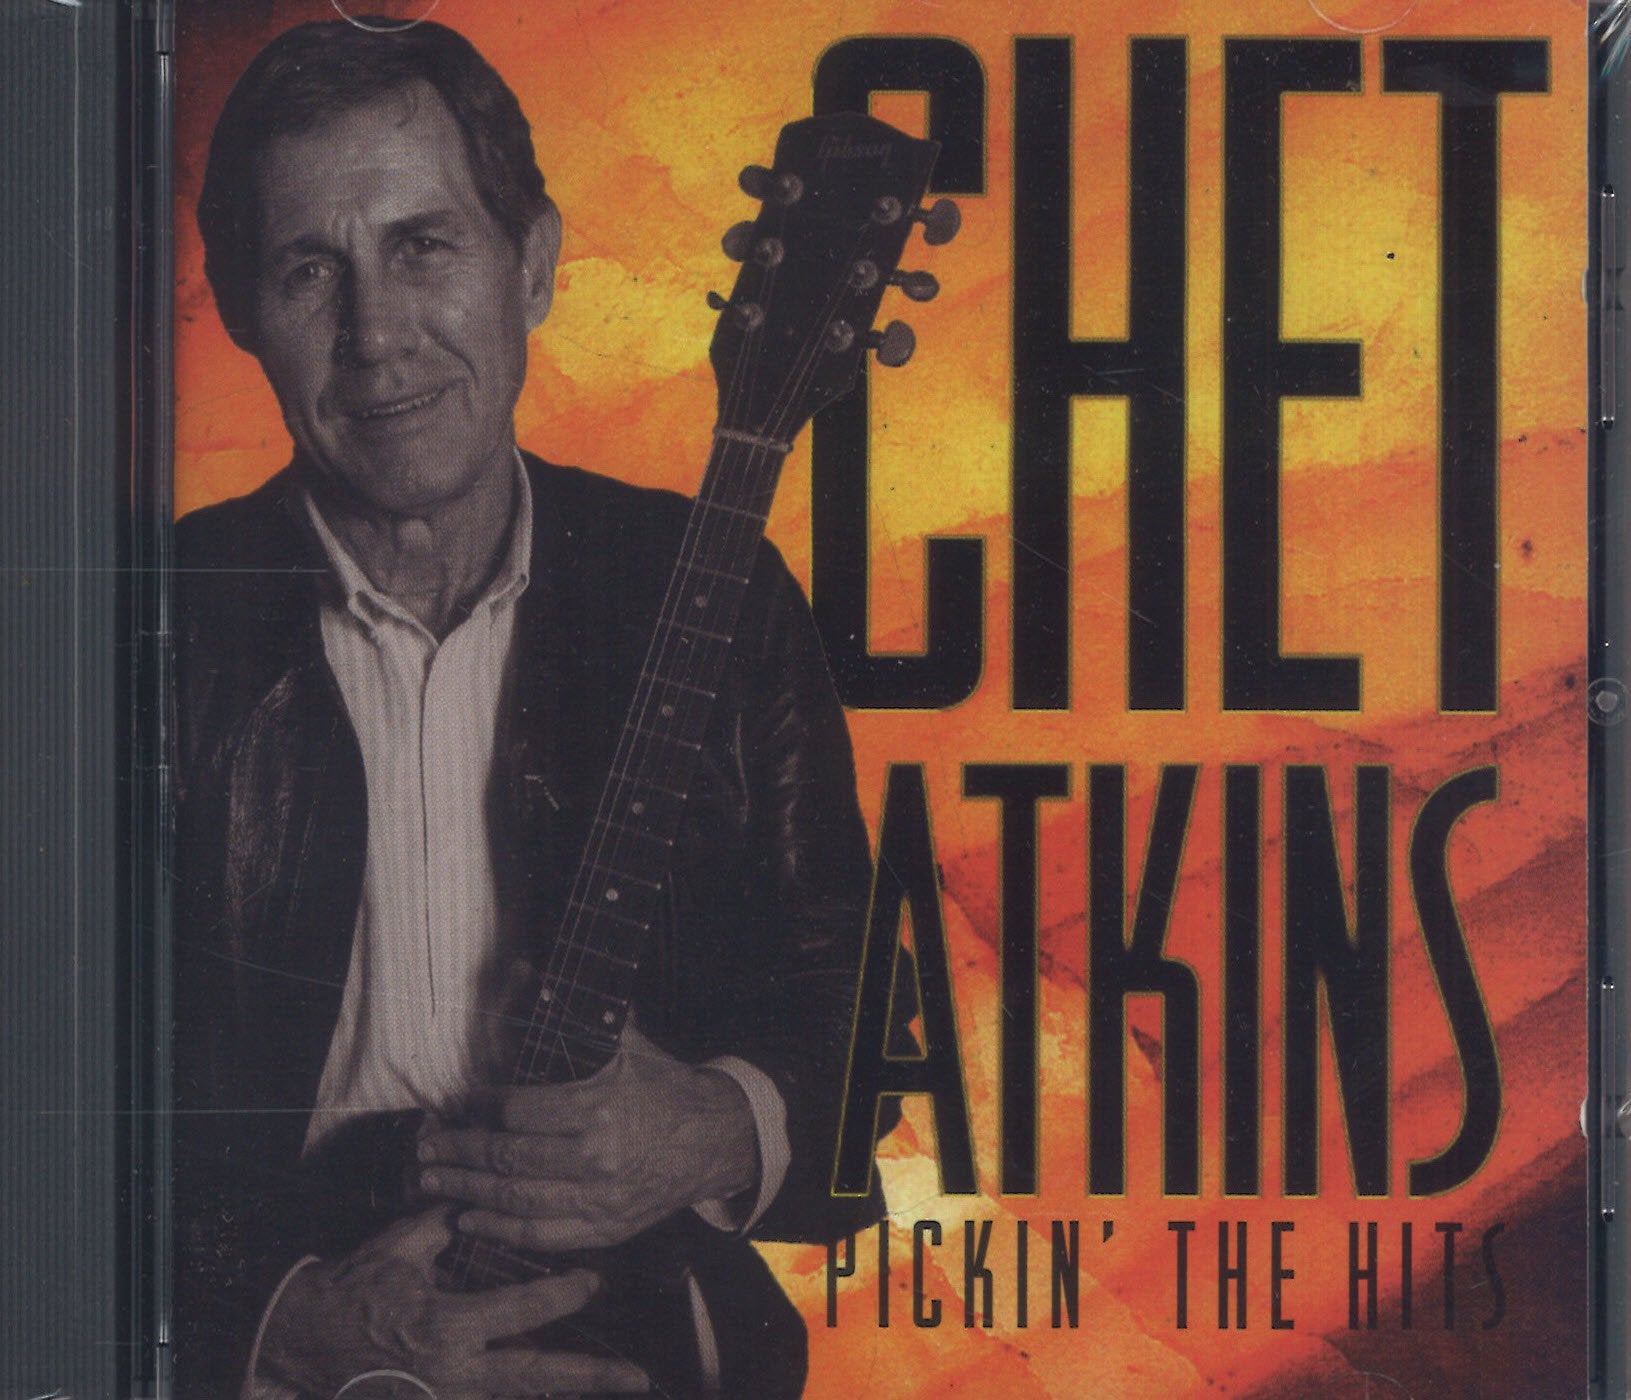 Chet Atkins Pickin' The Hits